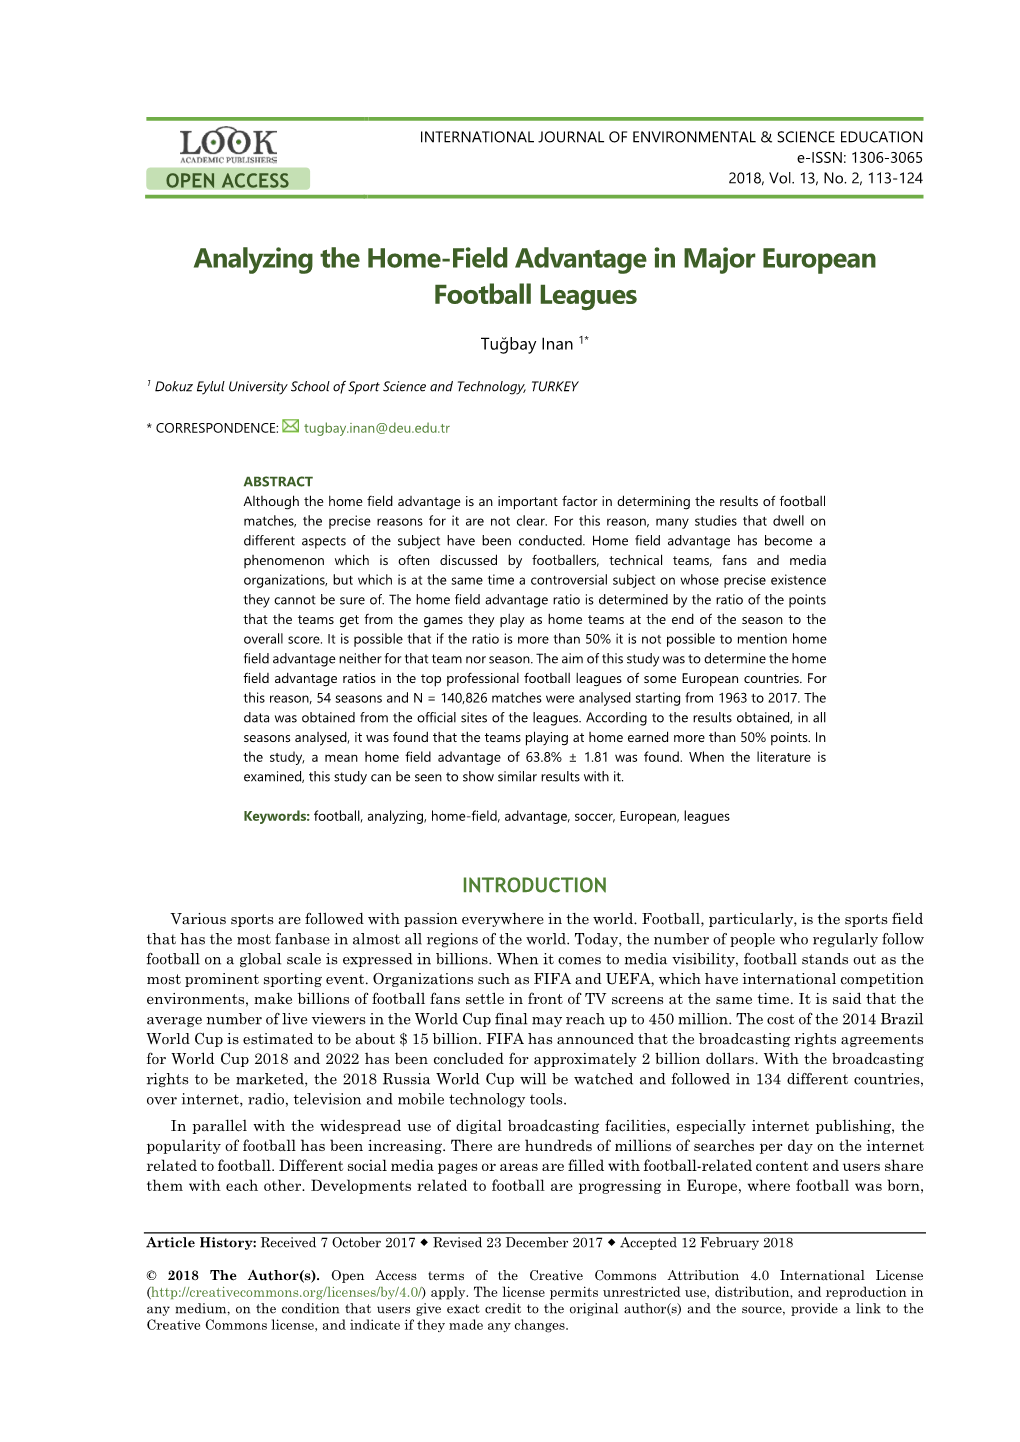 Analyzing the Home-Field Advantage in Major European Football Leagues